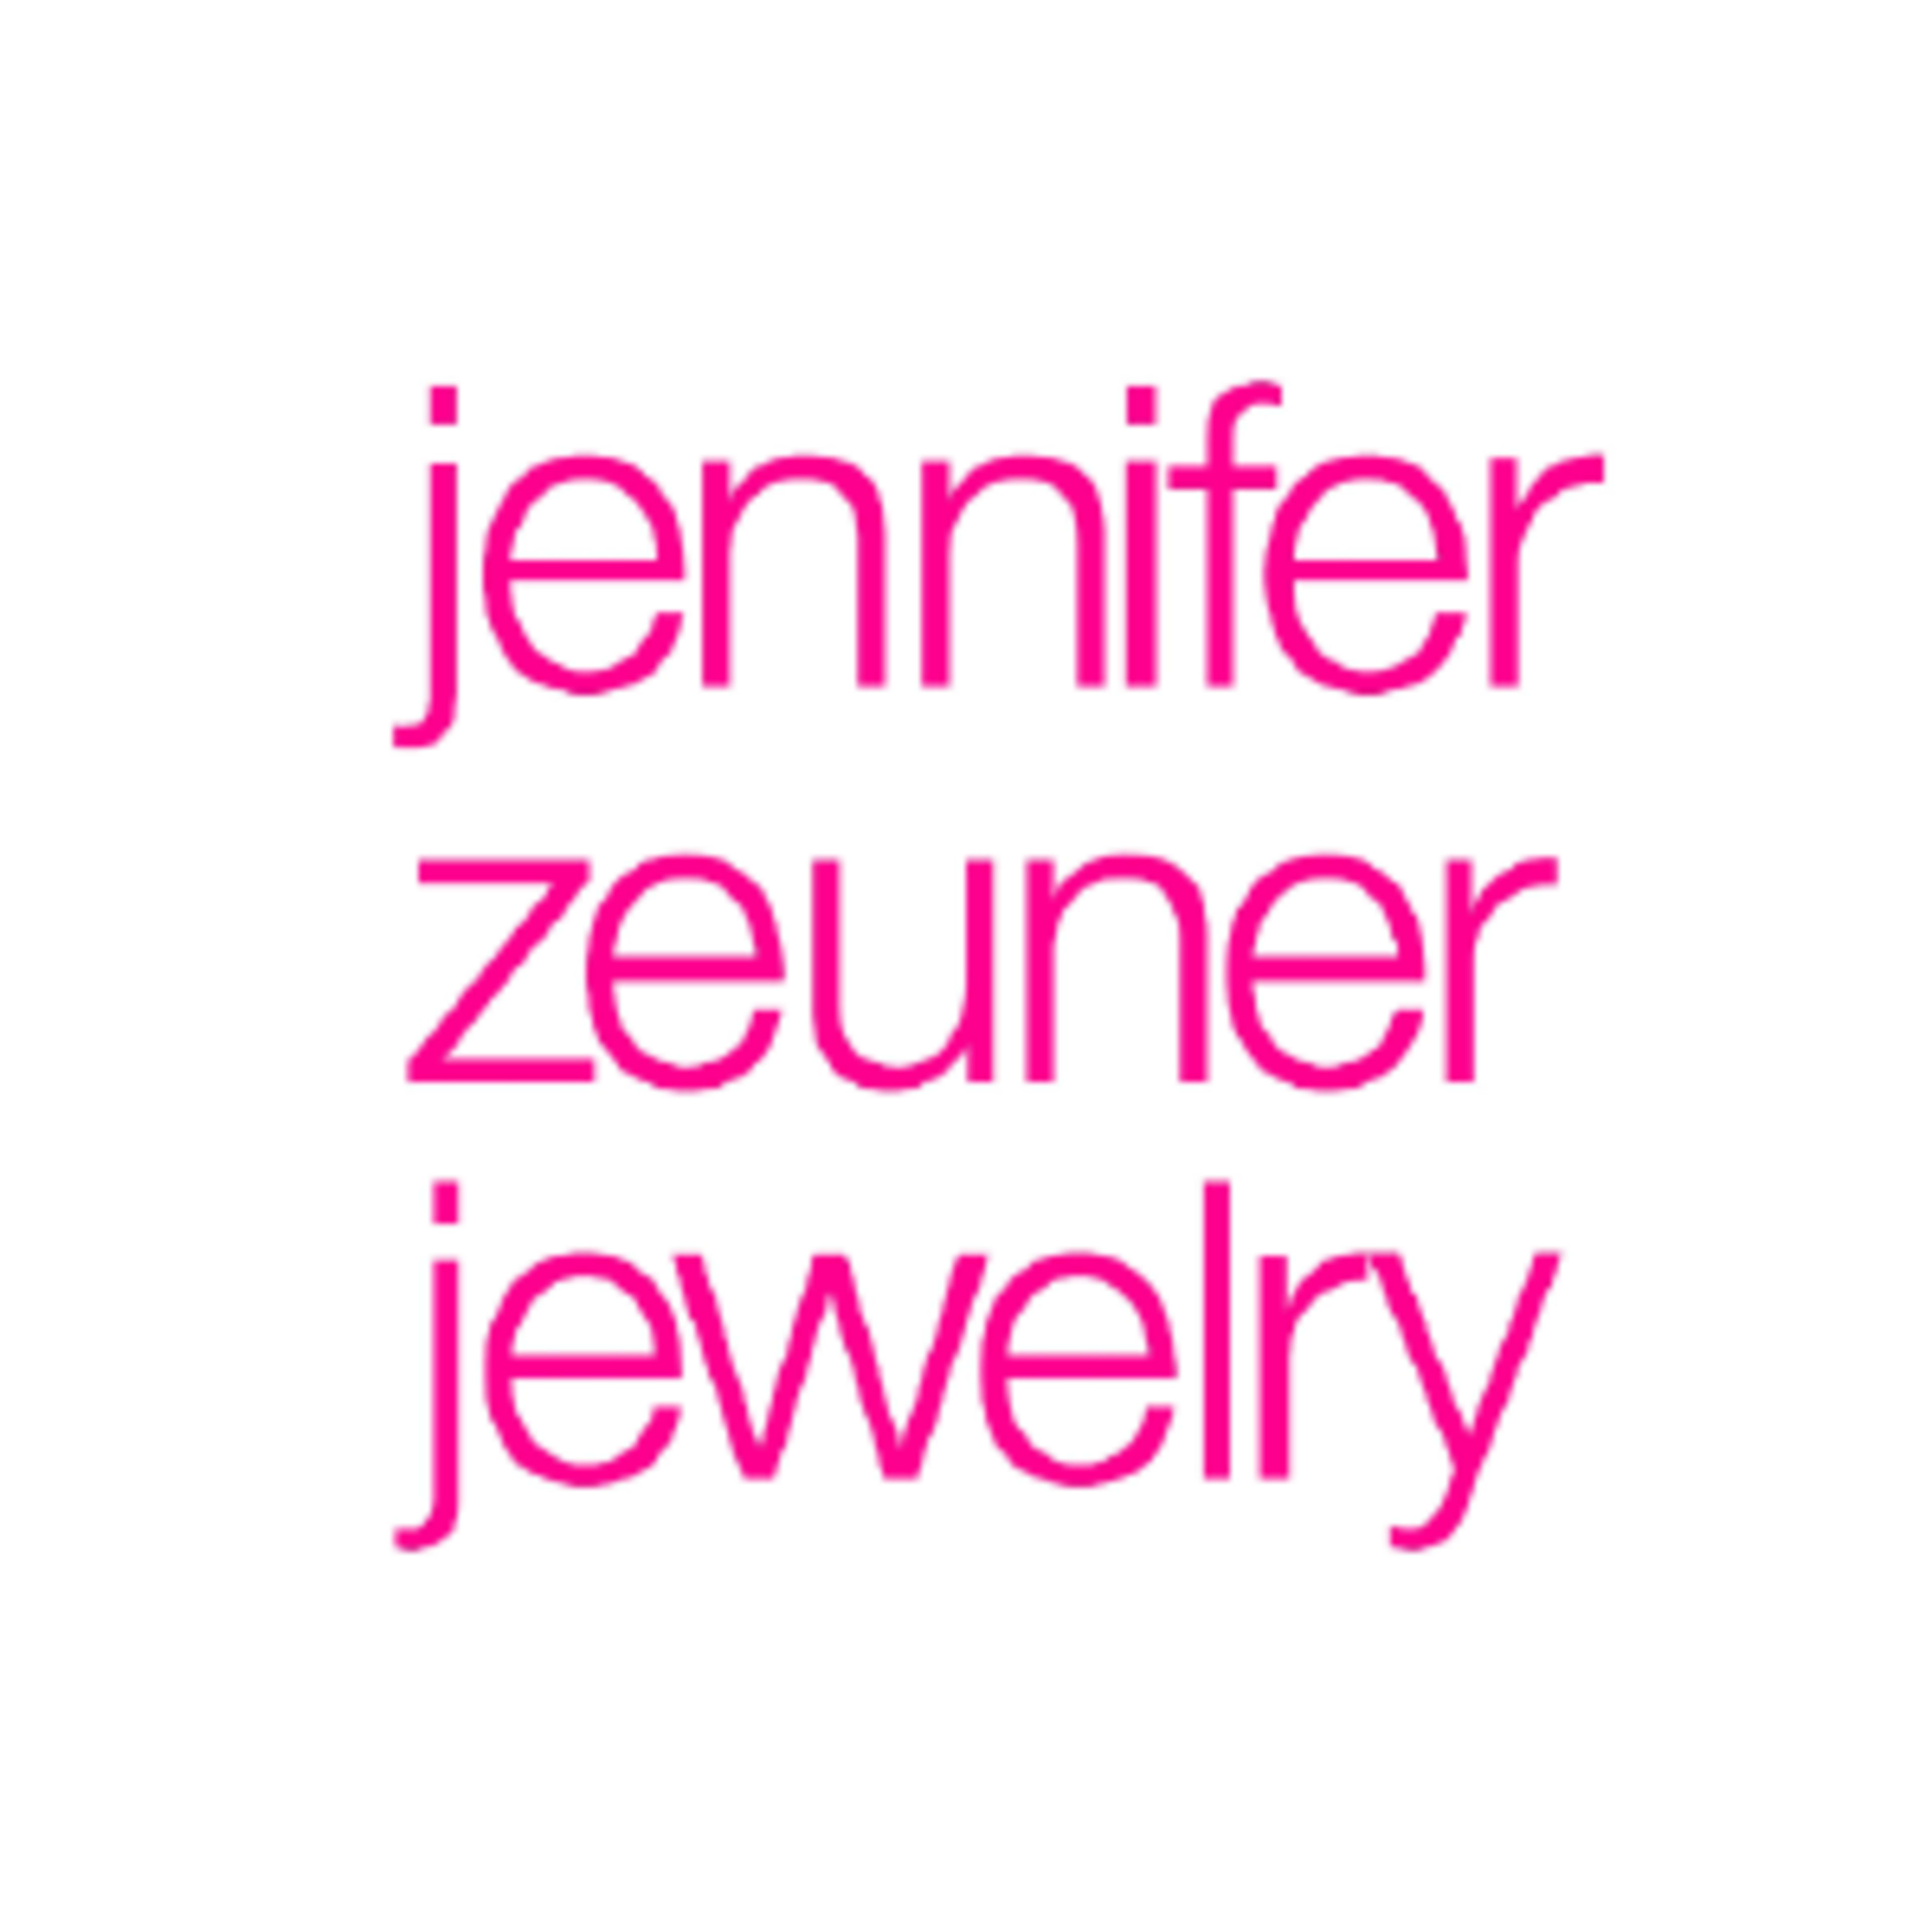 Jennifer Zeuner Jewelry Code